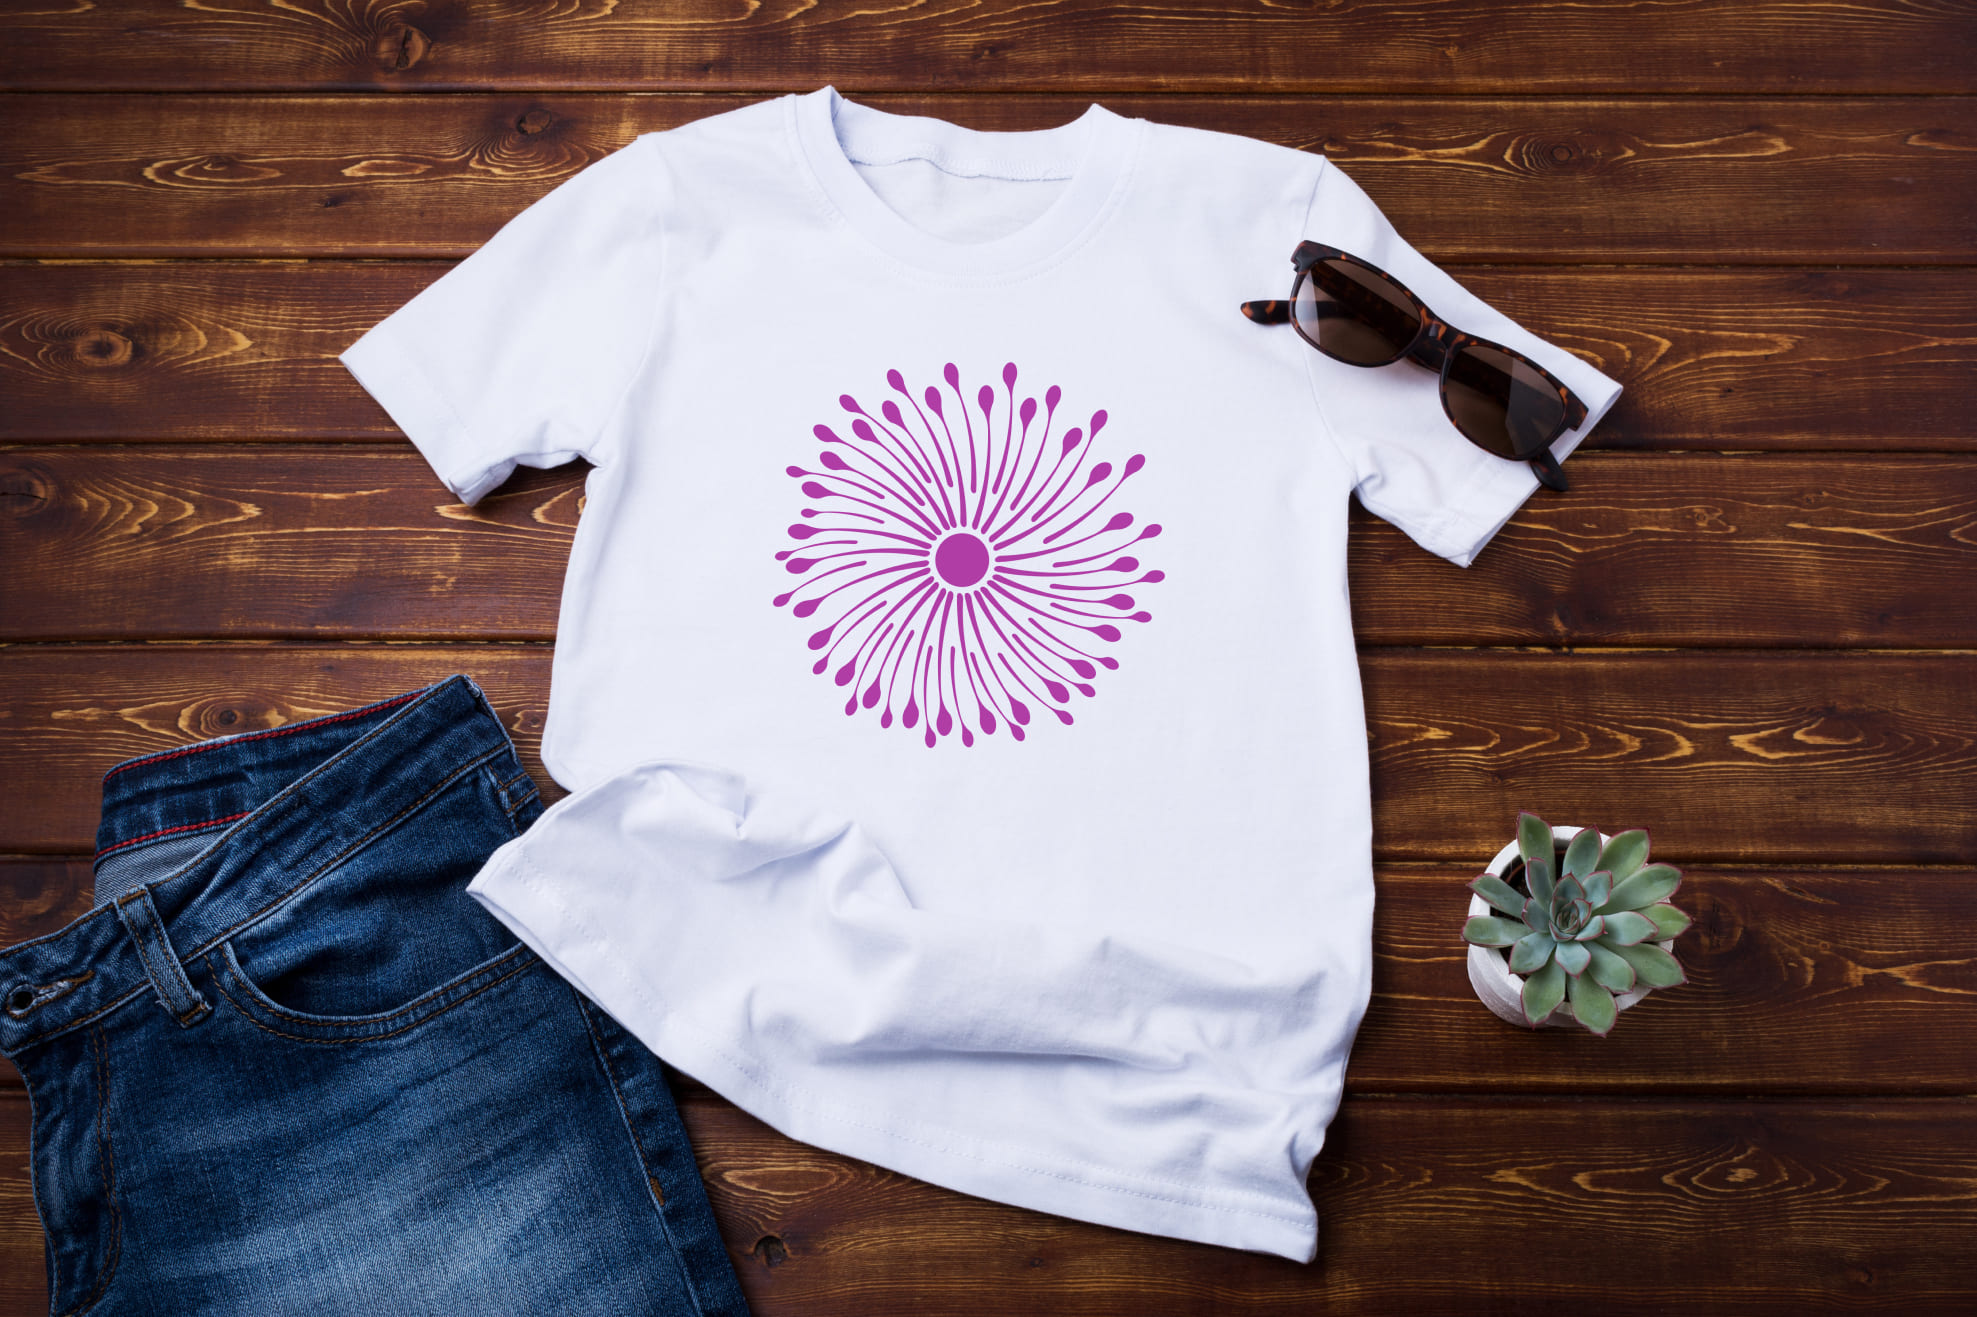 T-shirt image with wonderful dandelion print.